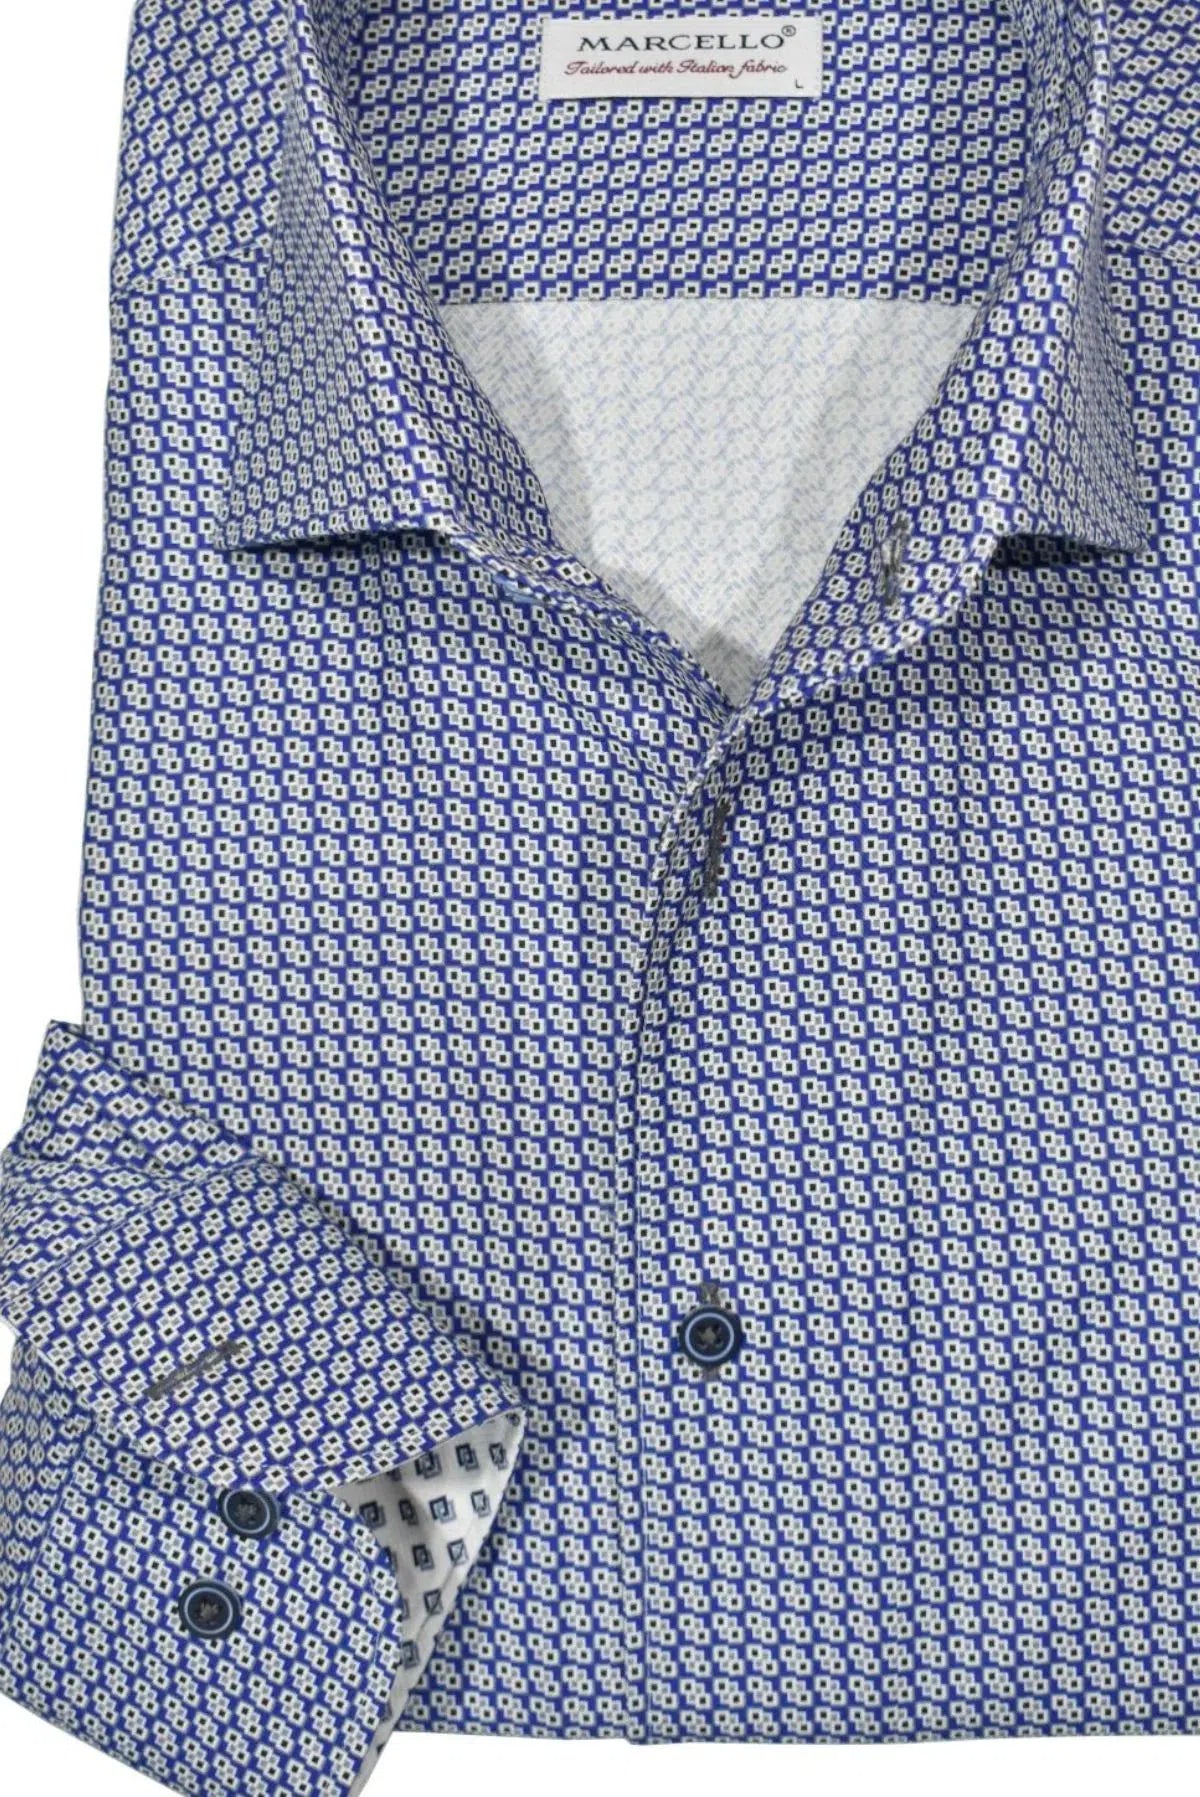 CMW710R - Cuadra blue casual fashion cotton shirt for men-Kuet.us